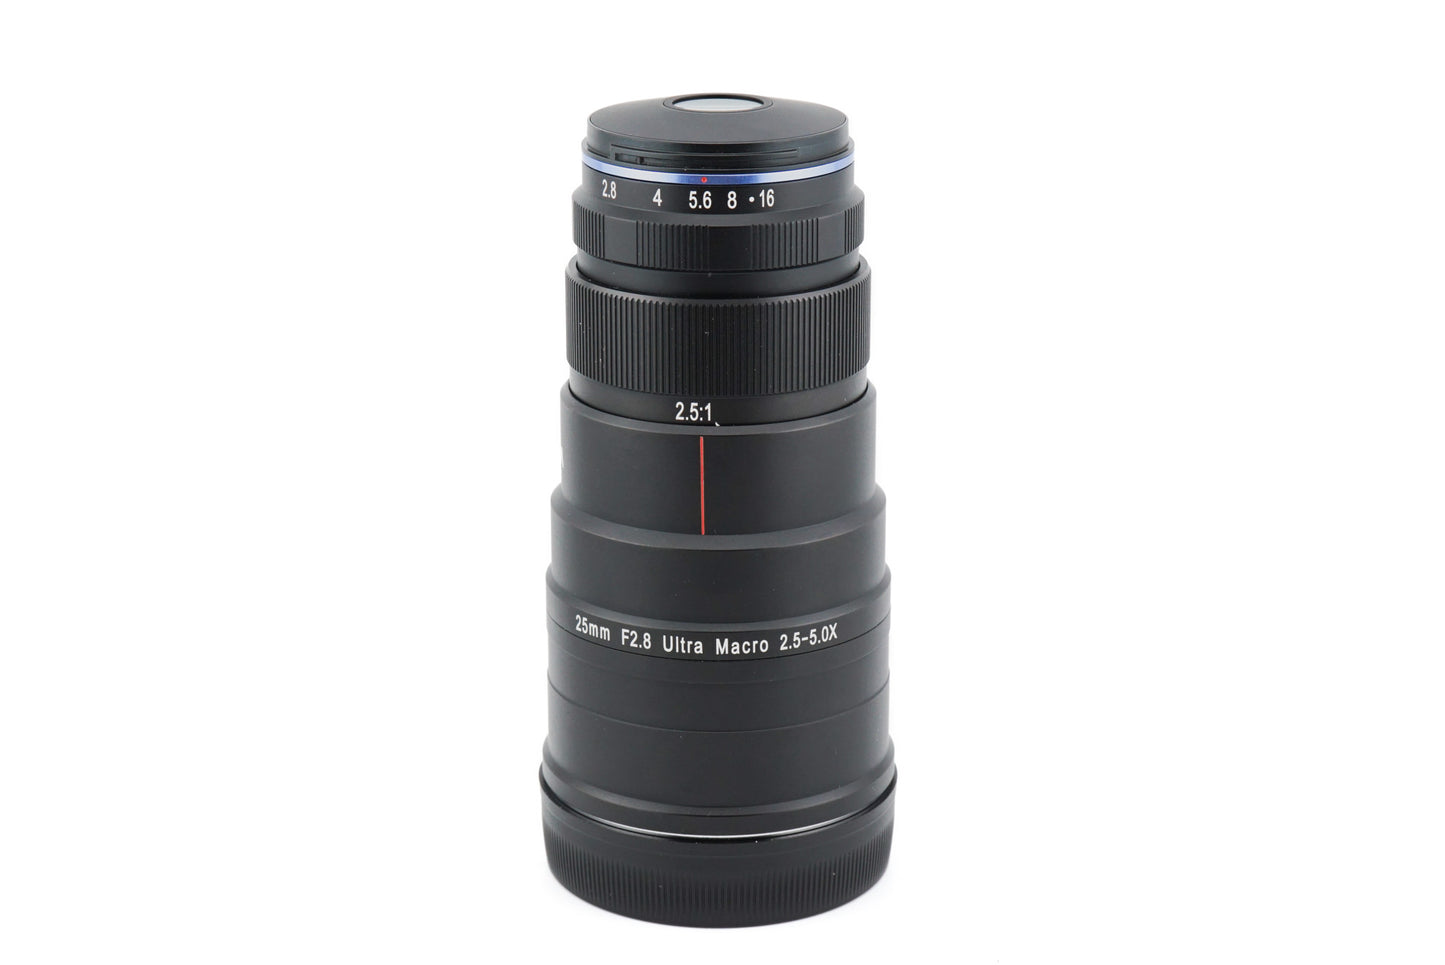 Laowa 25mm f2.8 Ultra Macro 2.5-5.0X - Lens